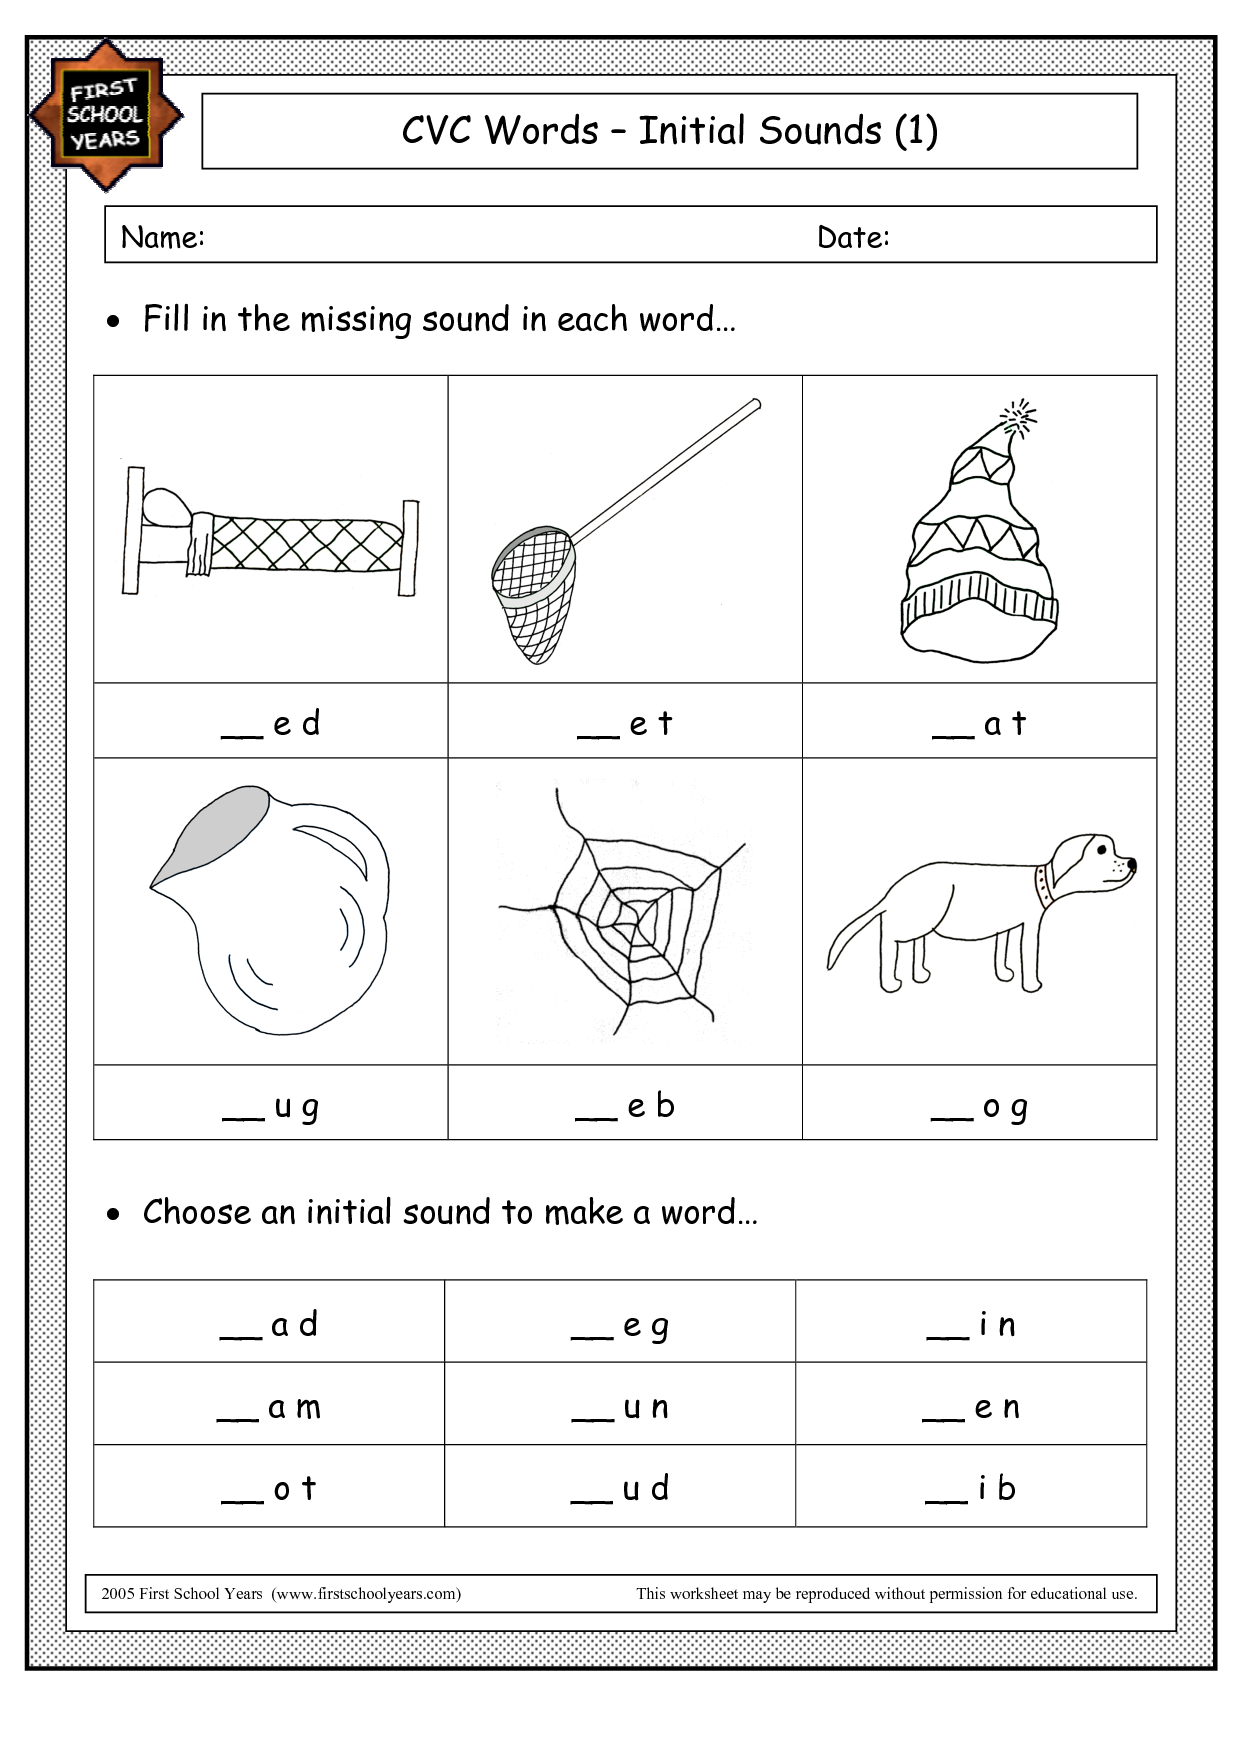 CVC Words Initial Sound Worksheet Image